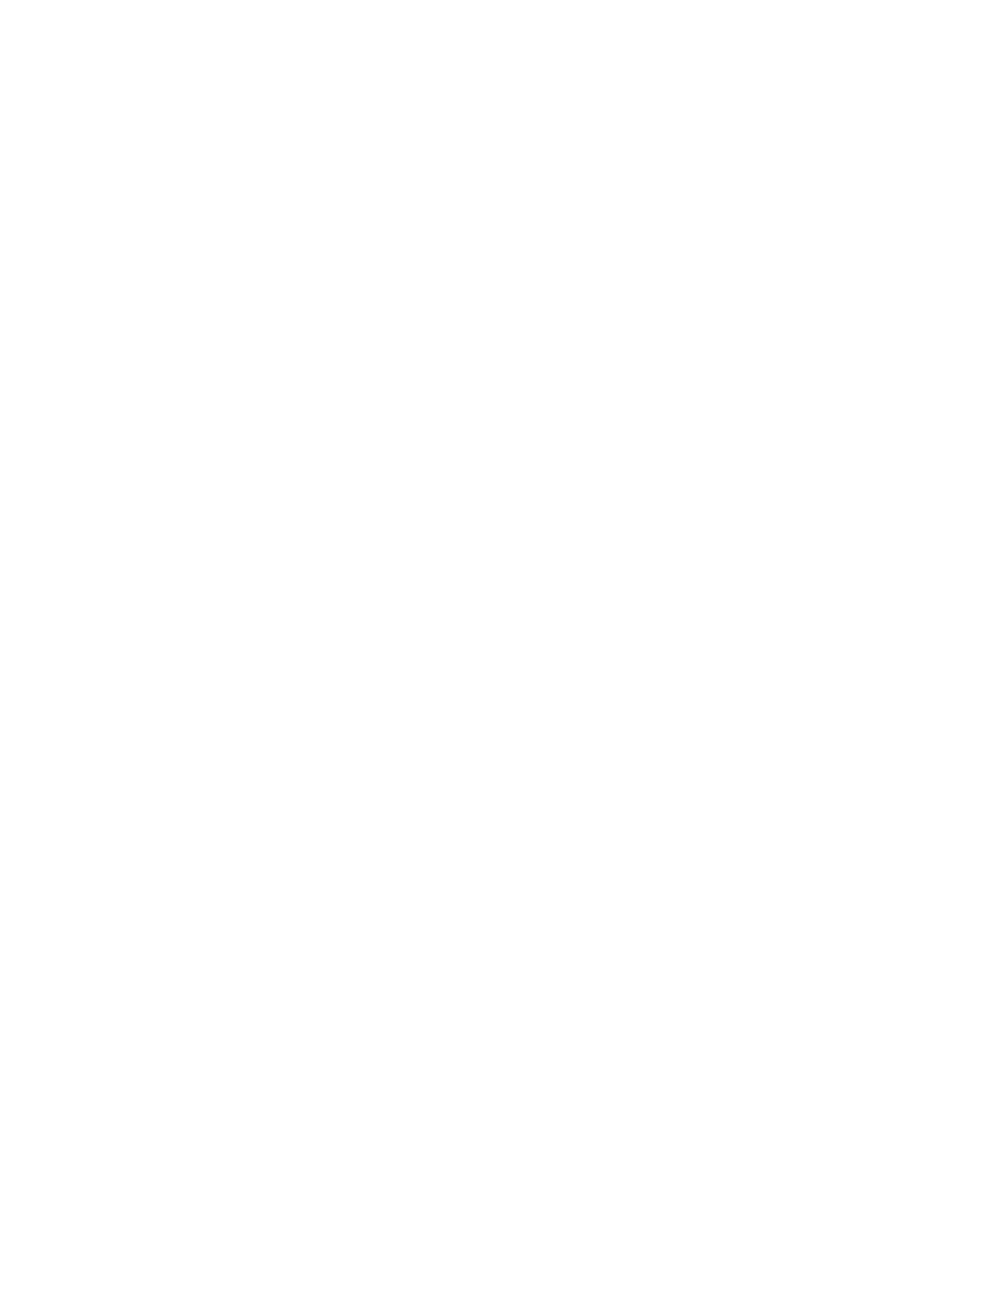 Wordpress Developer - Freelance